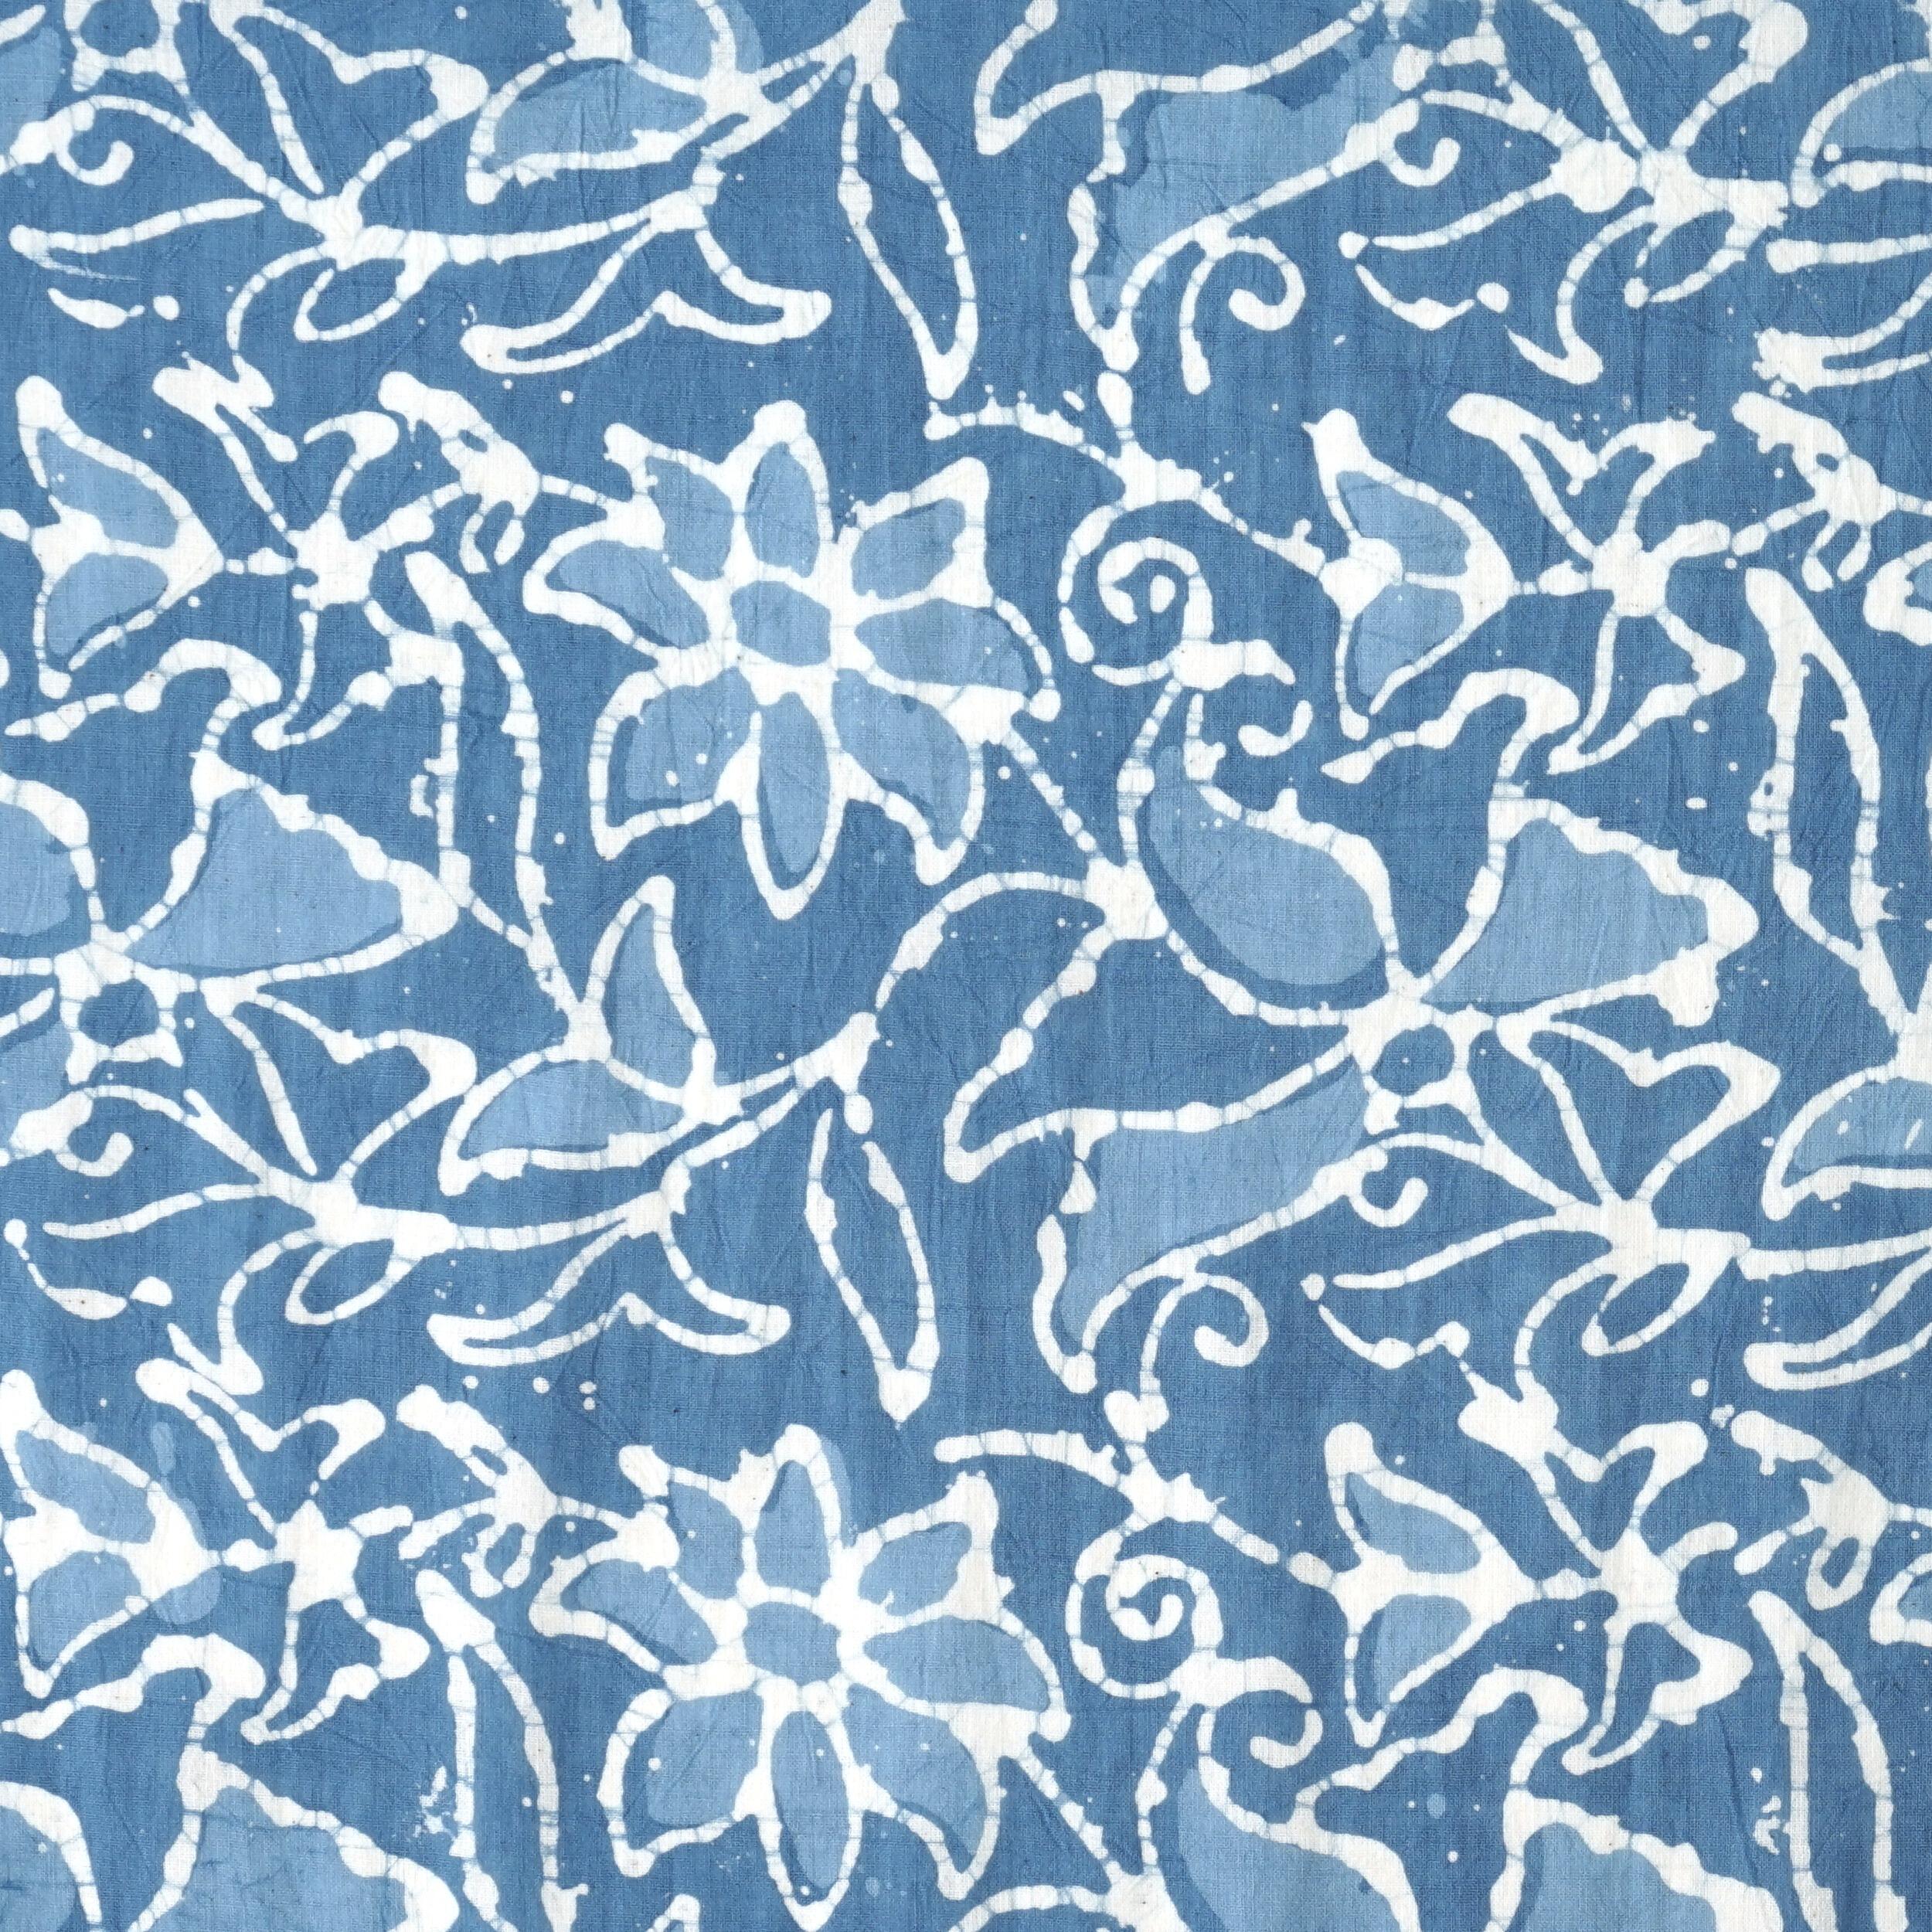 100% Block-Printed Batik Cotton Fabric From India - Blooming Blue Motif - Flat